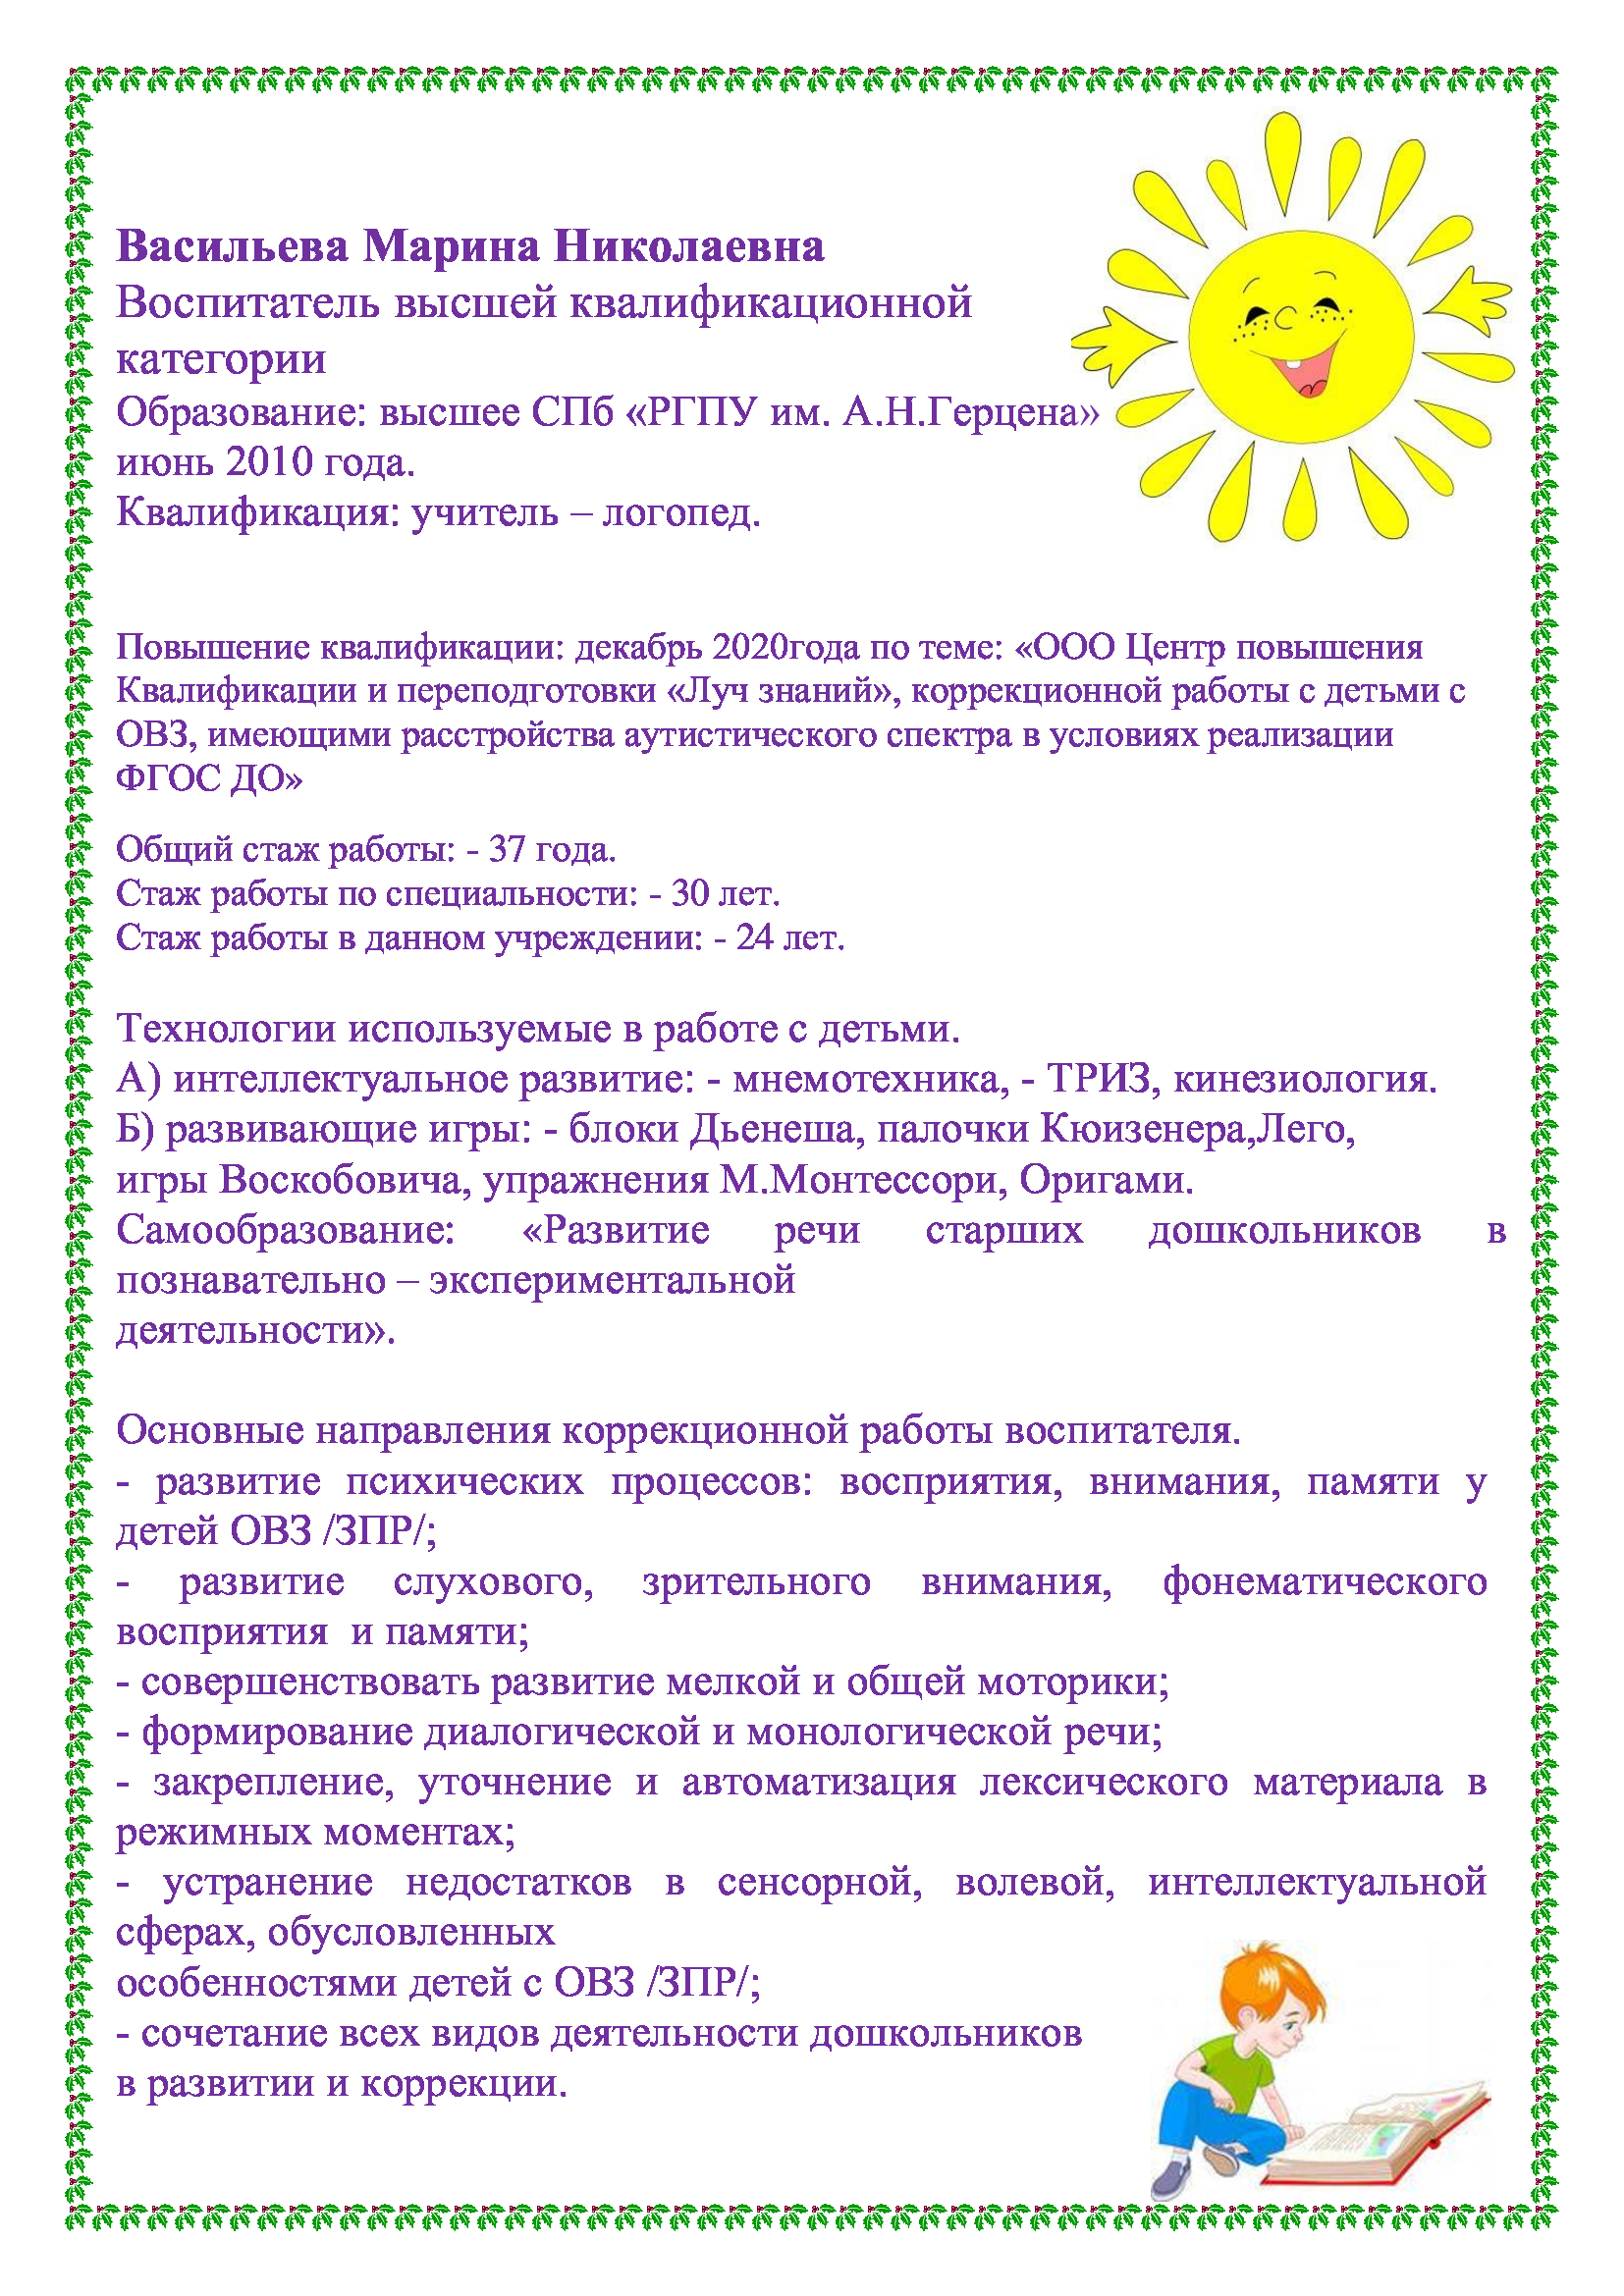 Васильева Марина Николаевна визитка